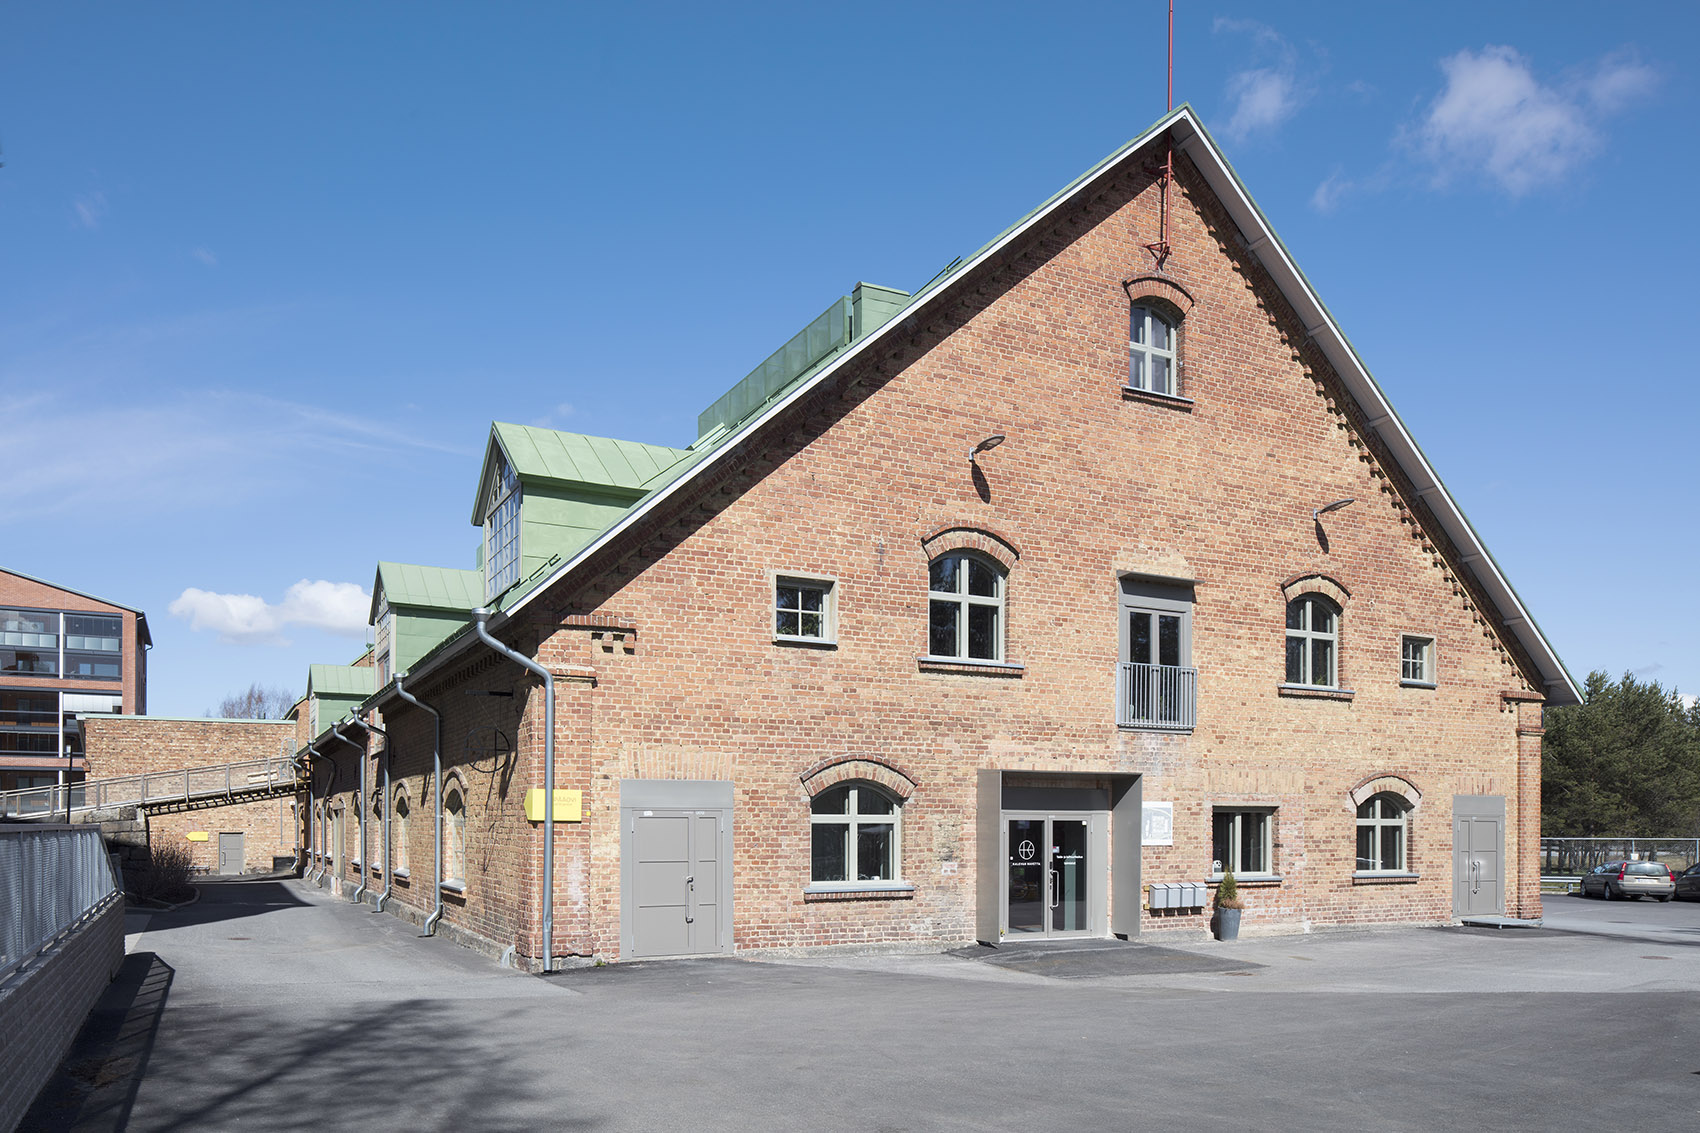 Kalevan Navetta文化艺术中心，芬兰/材料与结构的交响曲-62